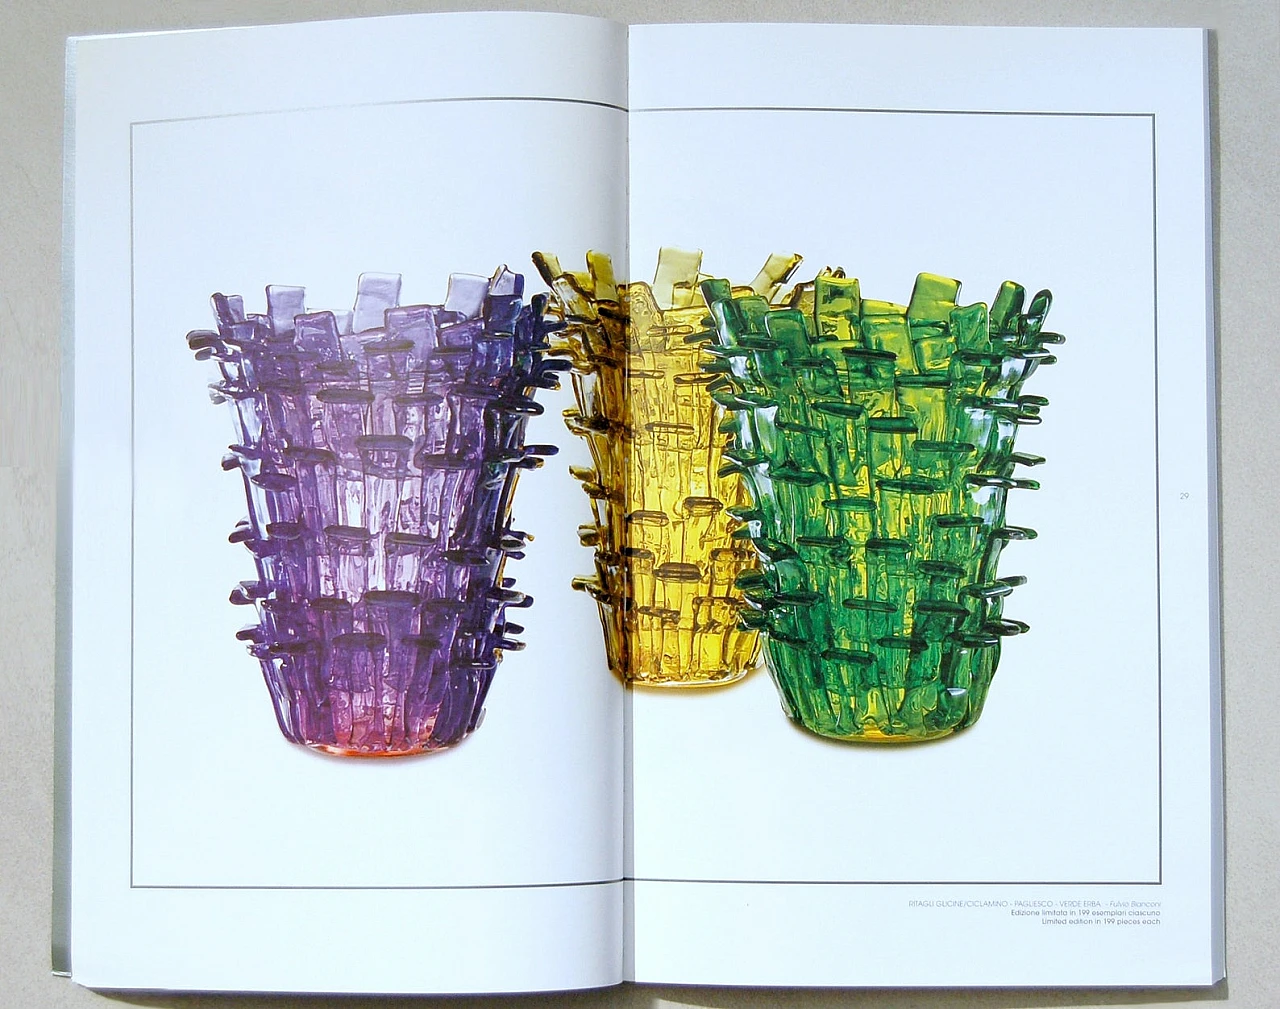 Straw yellow Ritagli vase by Fulvio Bianconi for Venini, 2002 6